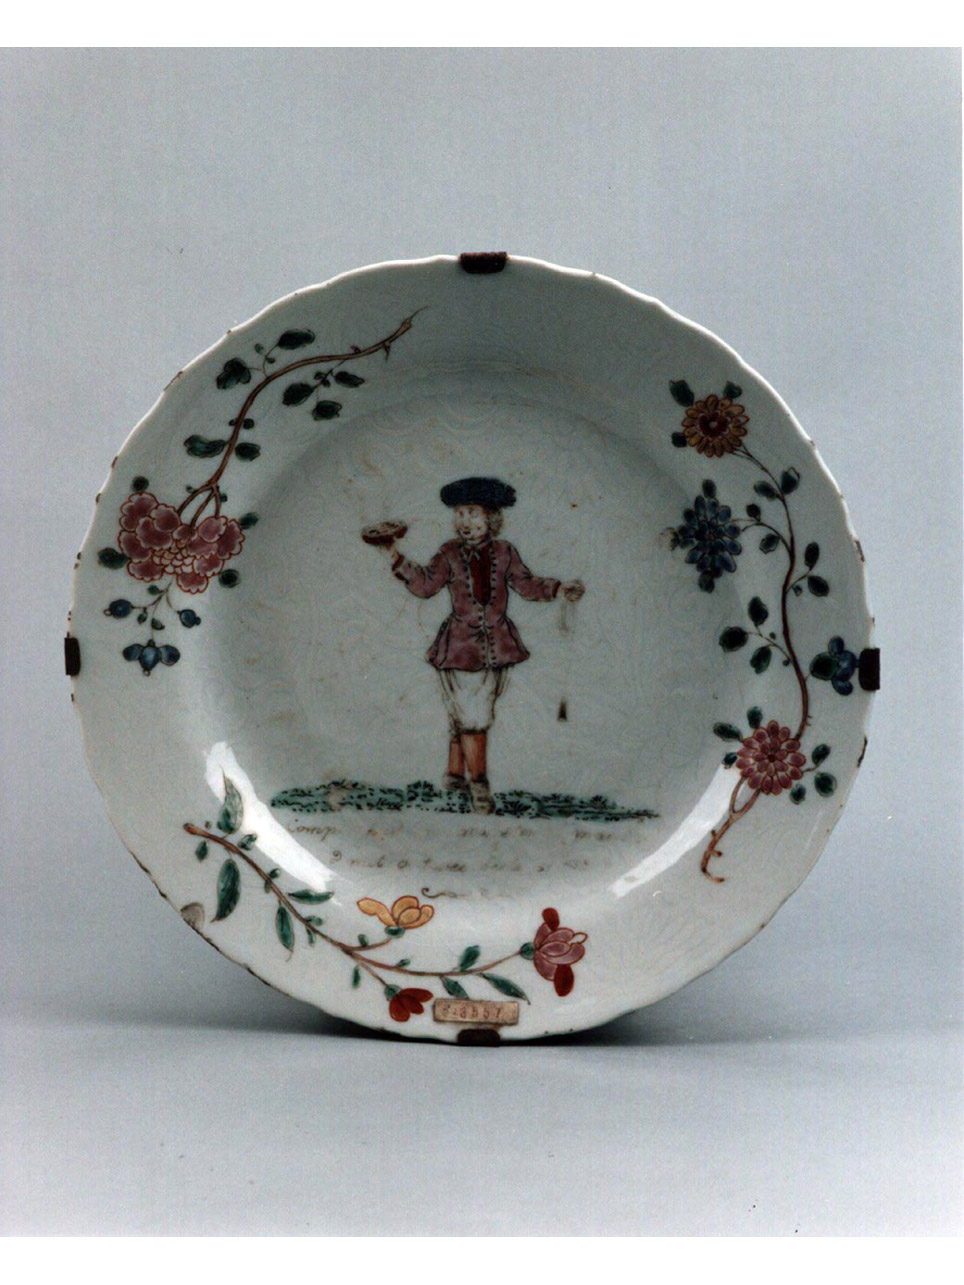 figura di gentiluomo/ motivi decorativi floreali (piatto) - manifattura olandese, manifattura cinese (sec. XVIII)